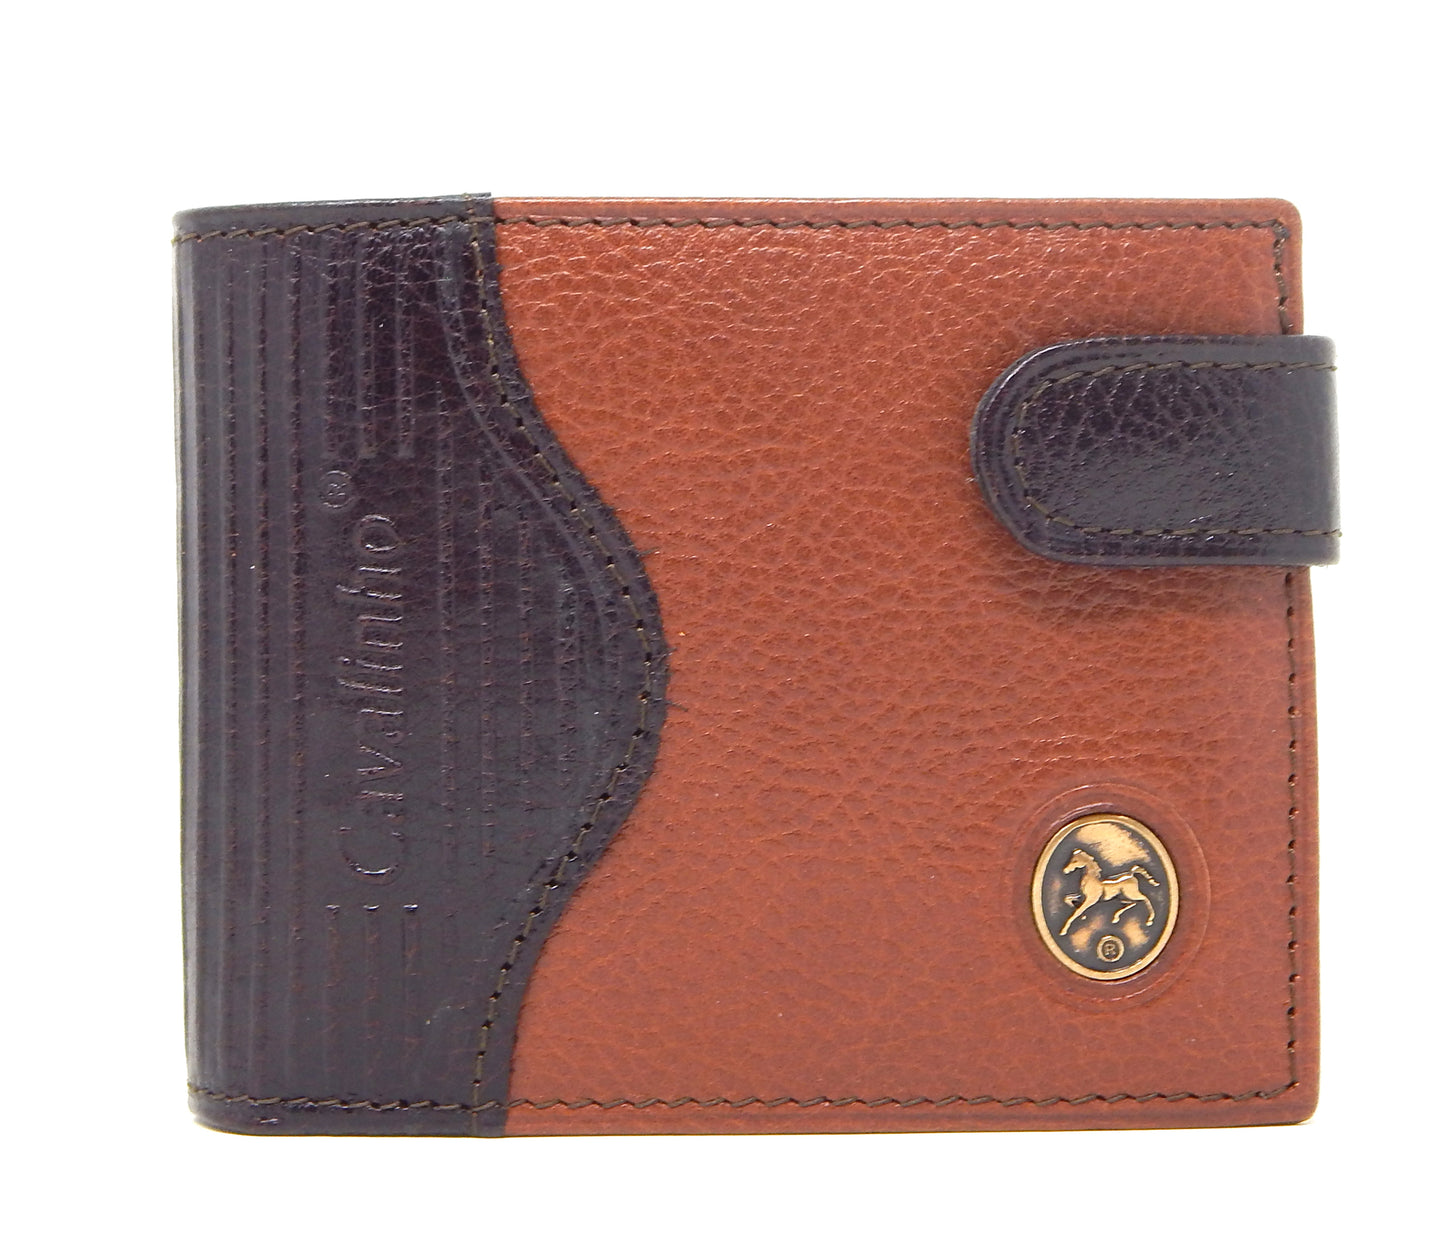 Cavalinho El Cavaleiro Trifold Leather Wallet - DarkBrown / SaddleBrown - 28650586.20.99_1